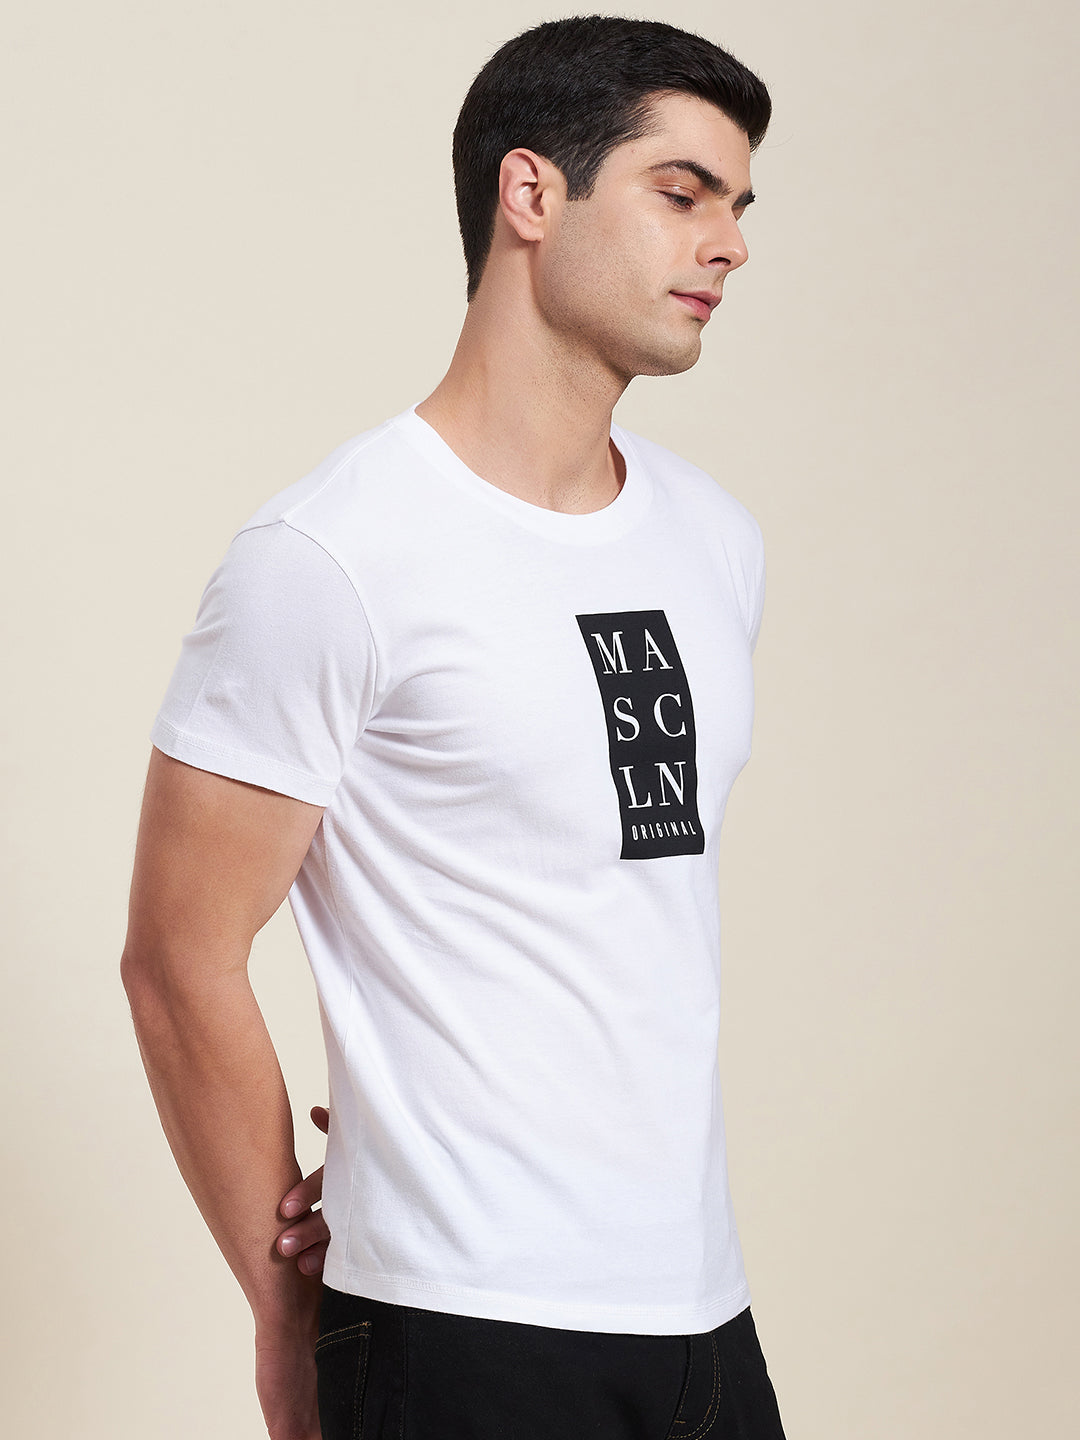 N2Z2TOZ - Men White Vertical MASCLN Slim Fit T-Shirt